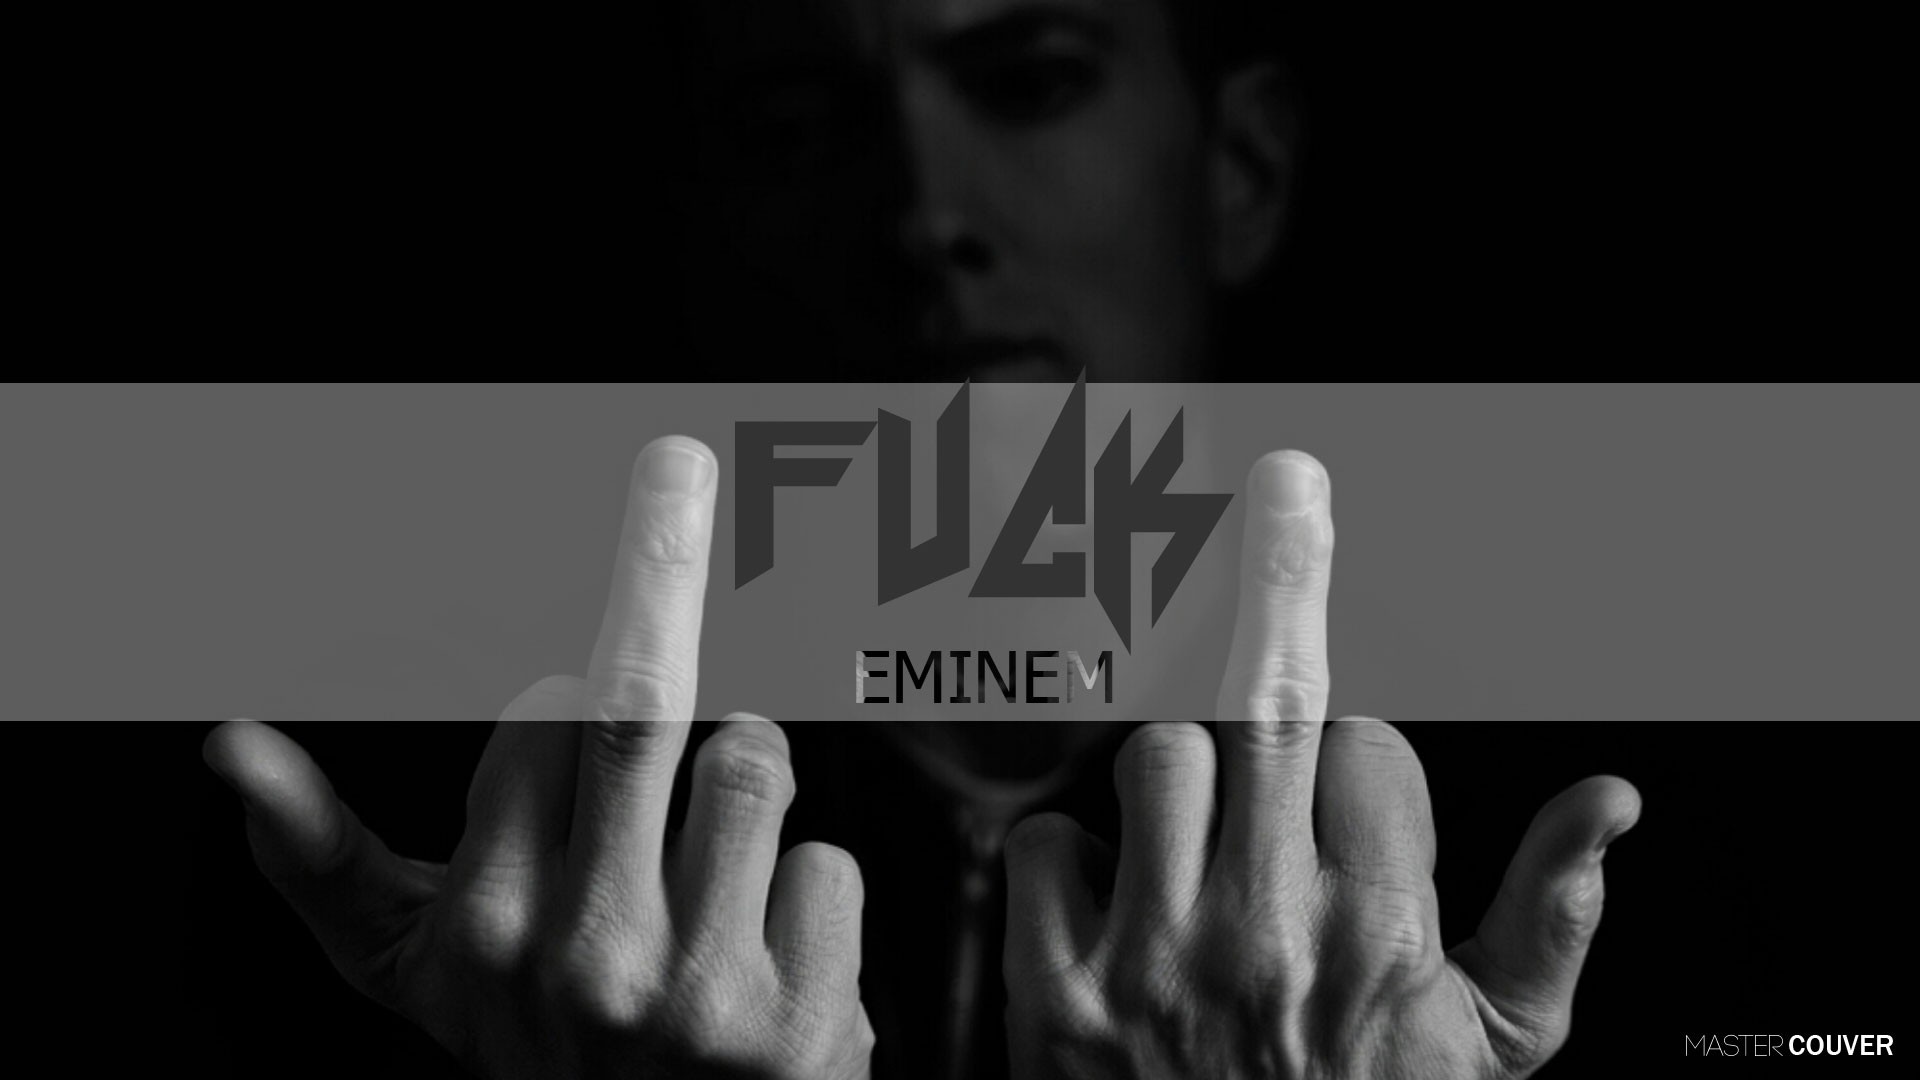 Wallpaper, middle finger, rap, emotion, f*ck, Eminem, hand, Sense, black and white, monochrome photography, font, interaction, human action 1920x1080